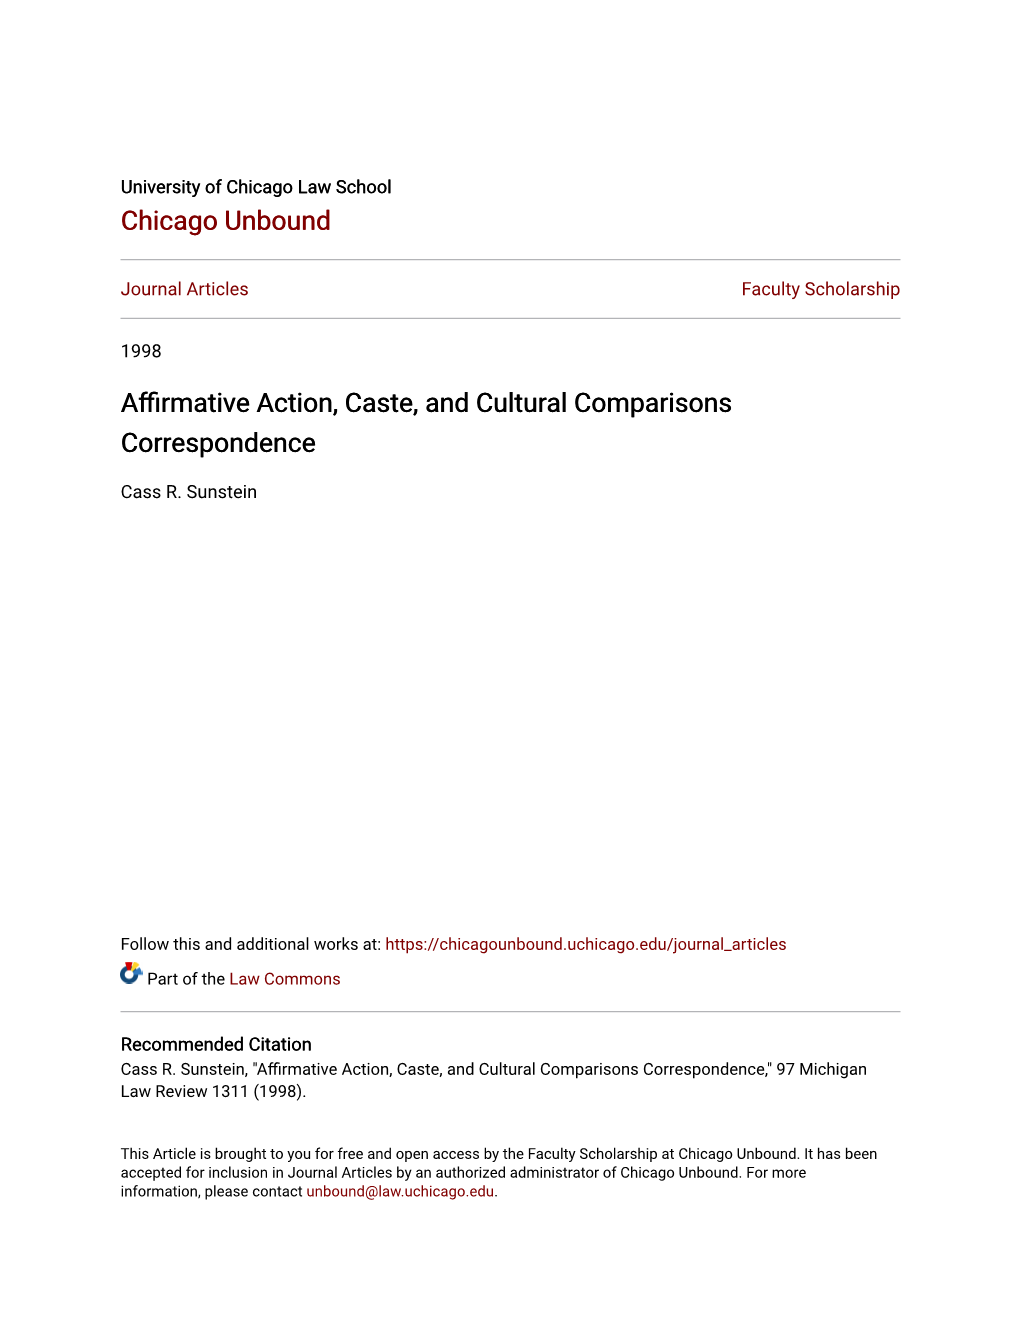 Affirmative Action, Caste, and Cultural Comparisons Correspondence